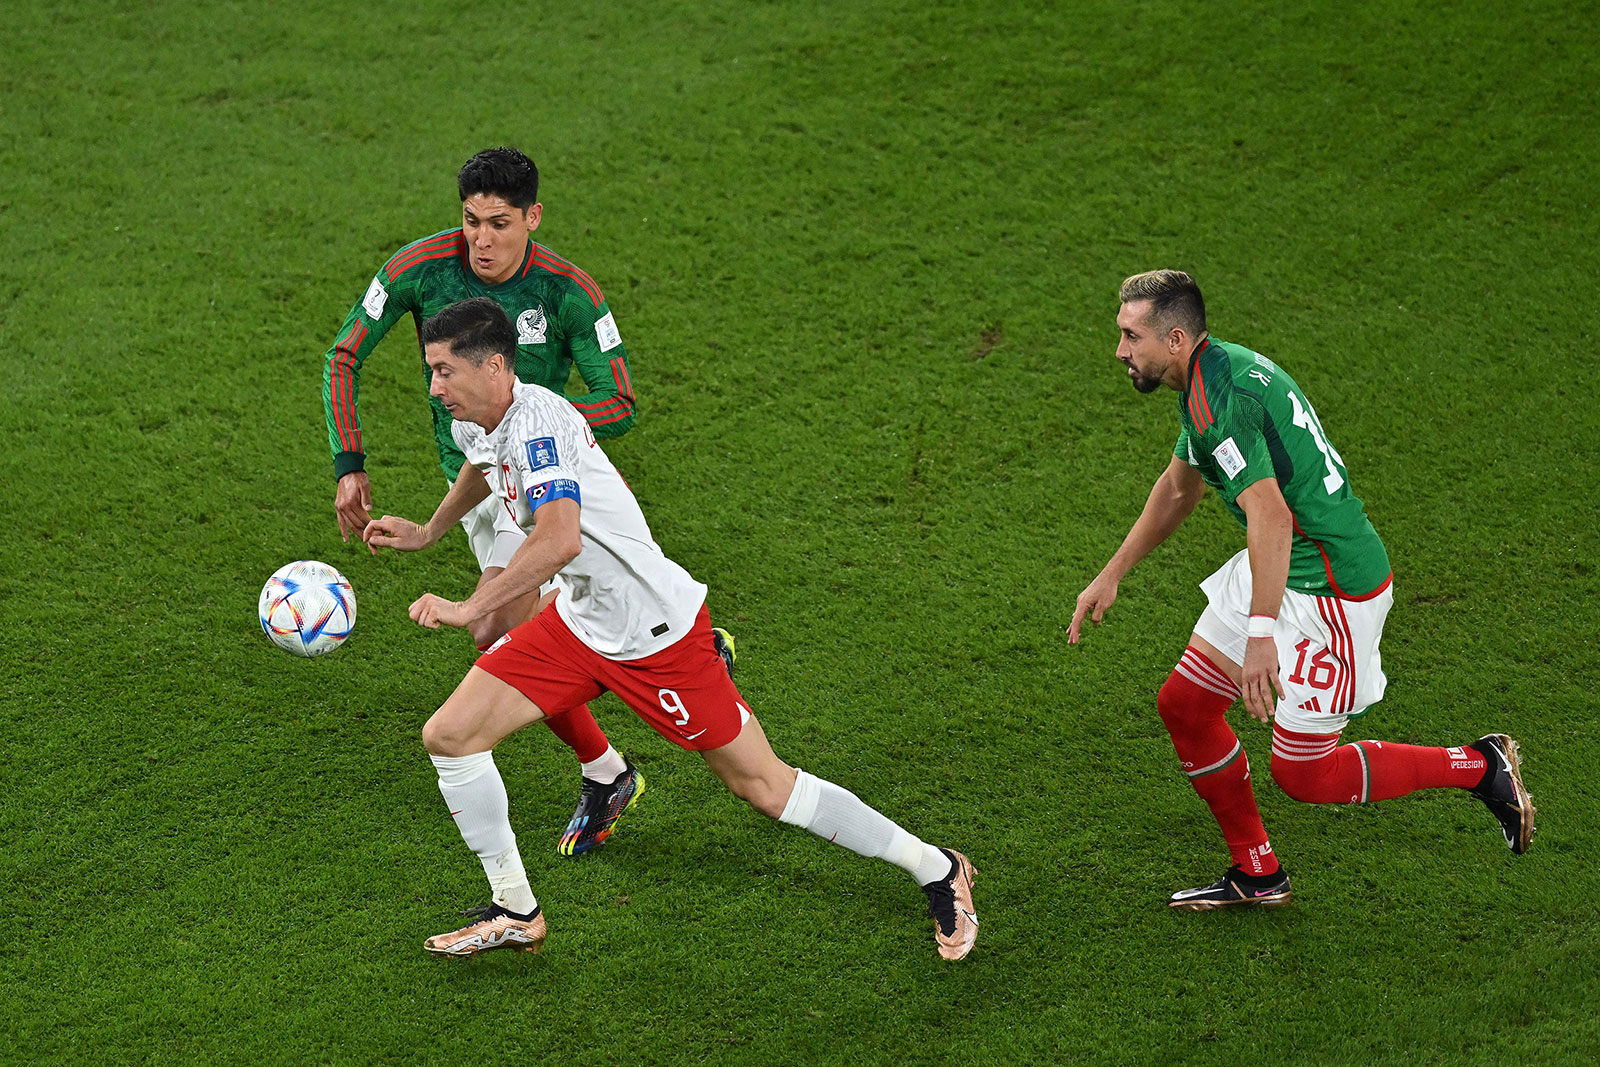 Poland's forward Robert Lewandowski drives the ball during the match against Mexico on November 22.